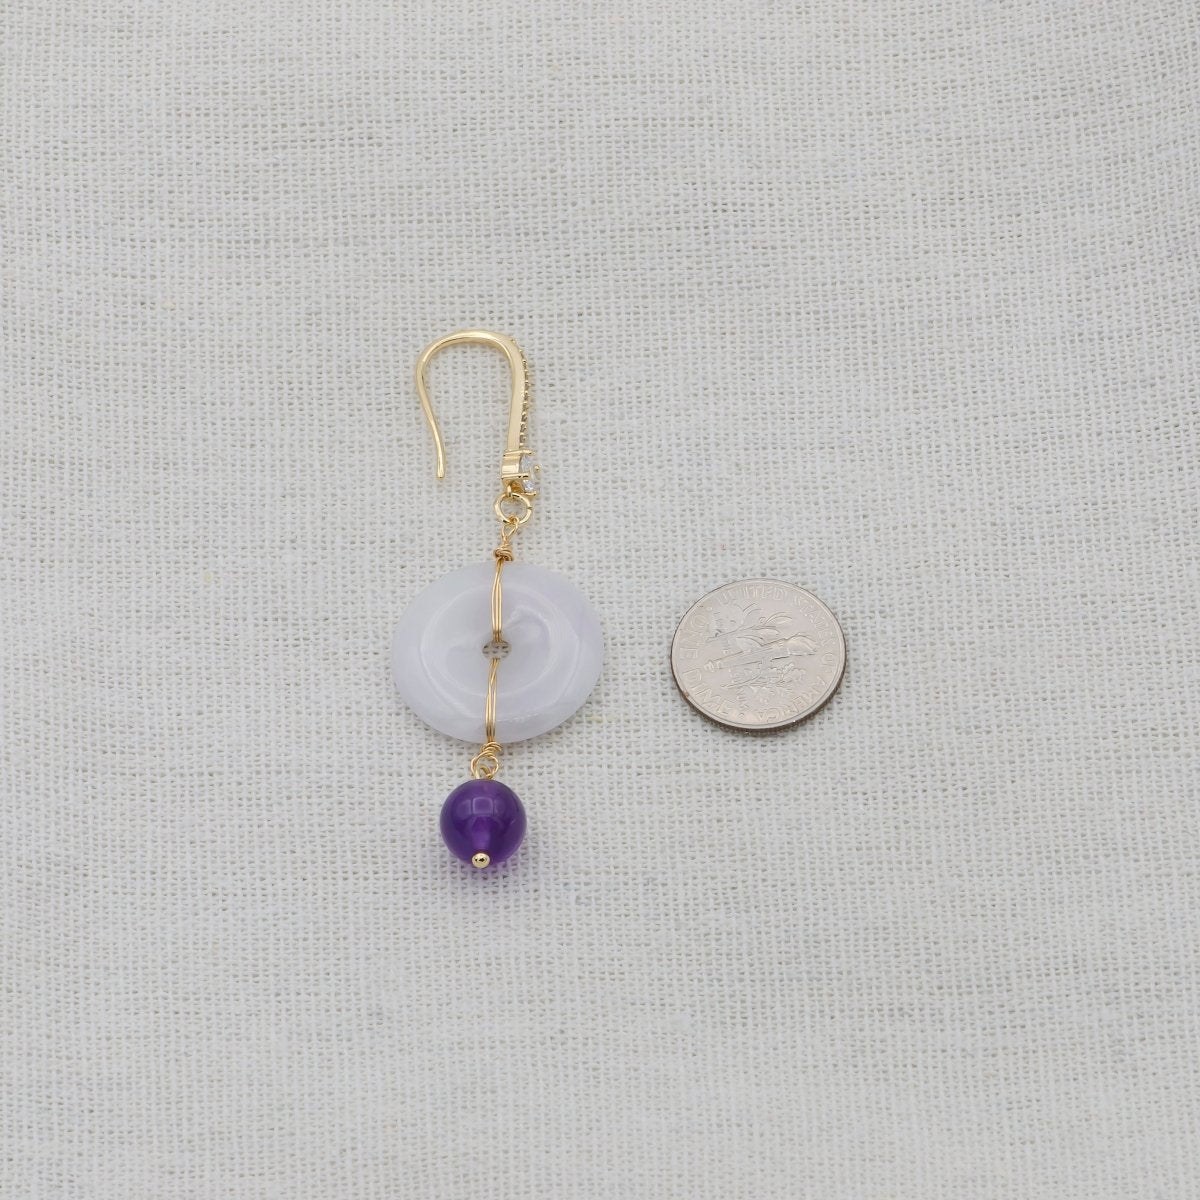 Handmade Natural Round White Jade Purple CZ Drop Micro Paved French Hook Earrings | Leo-533 - DLUXCA